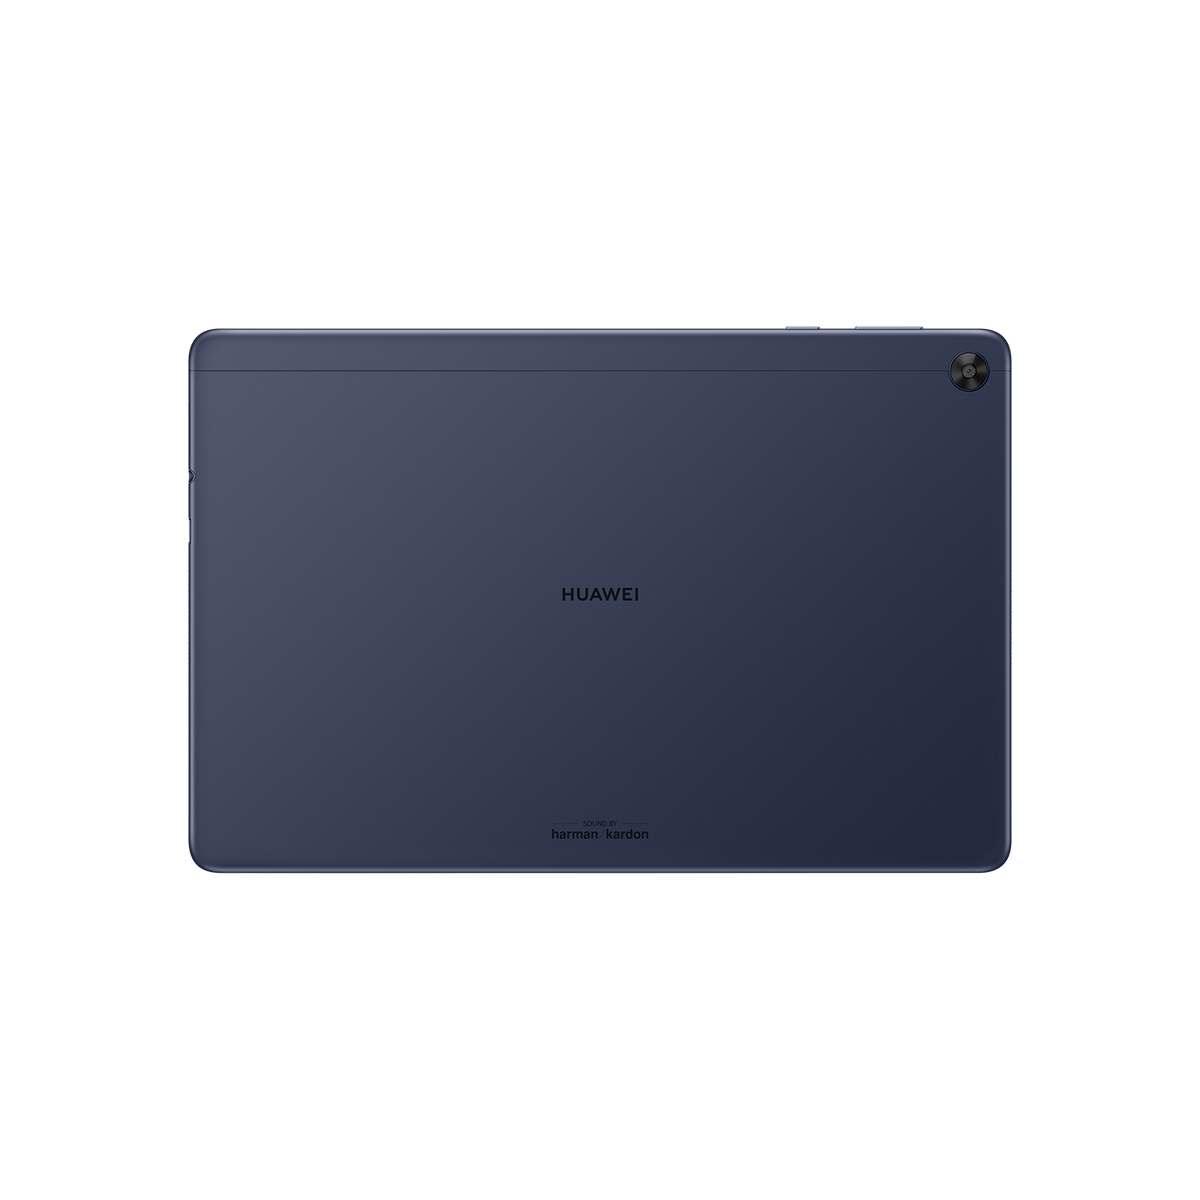 HUAWEI MATEPAD T 10S GB, WIFI Zoll, Deepsea Tablet, Blue 64 3+64G, AGASSI3-W09C 10,1